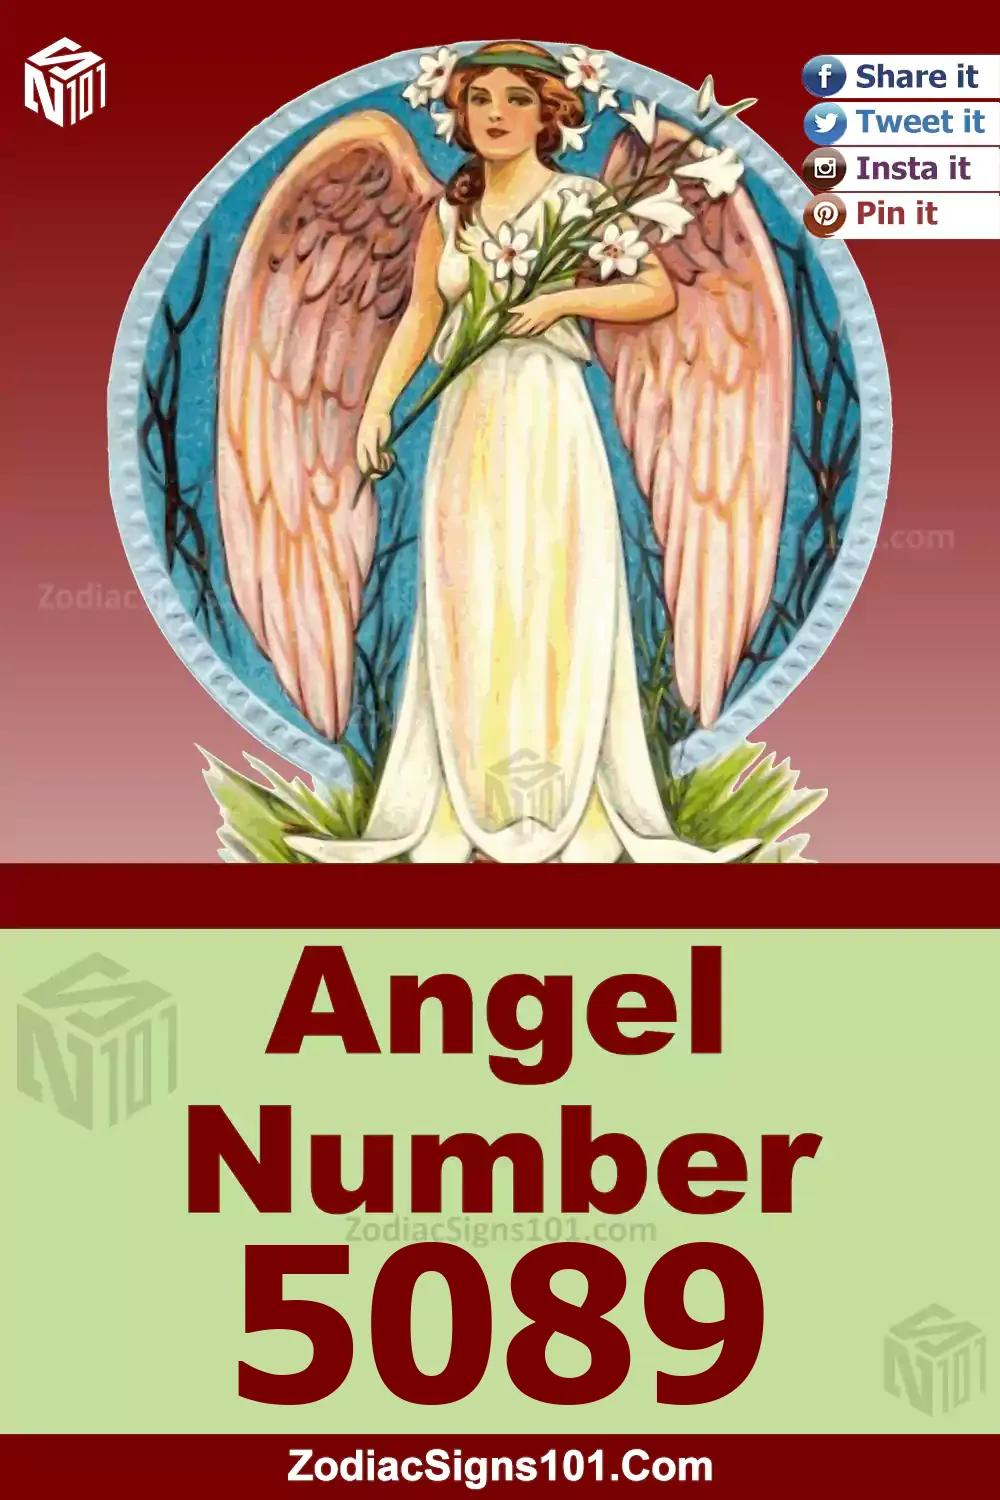 5089-Angel-Number-Meaning.jpg